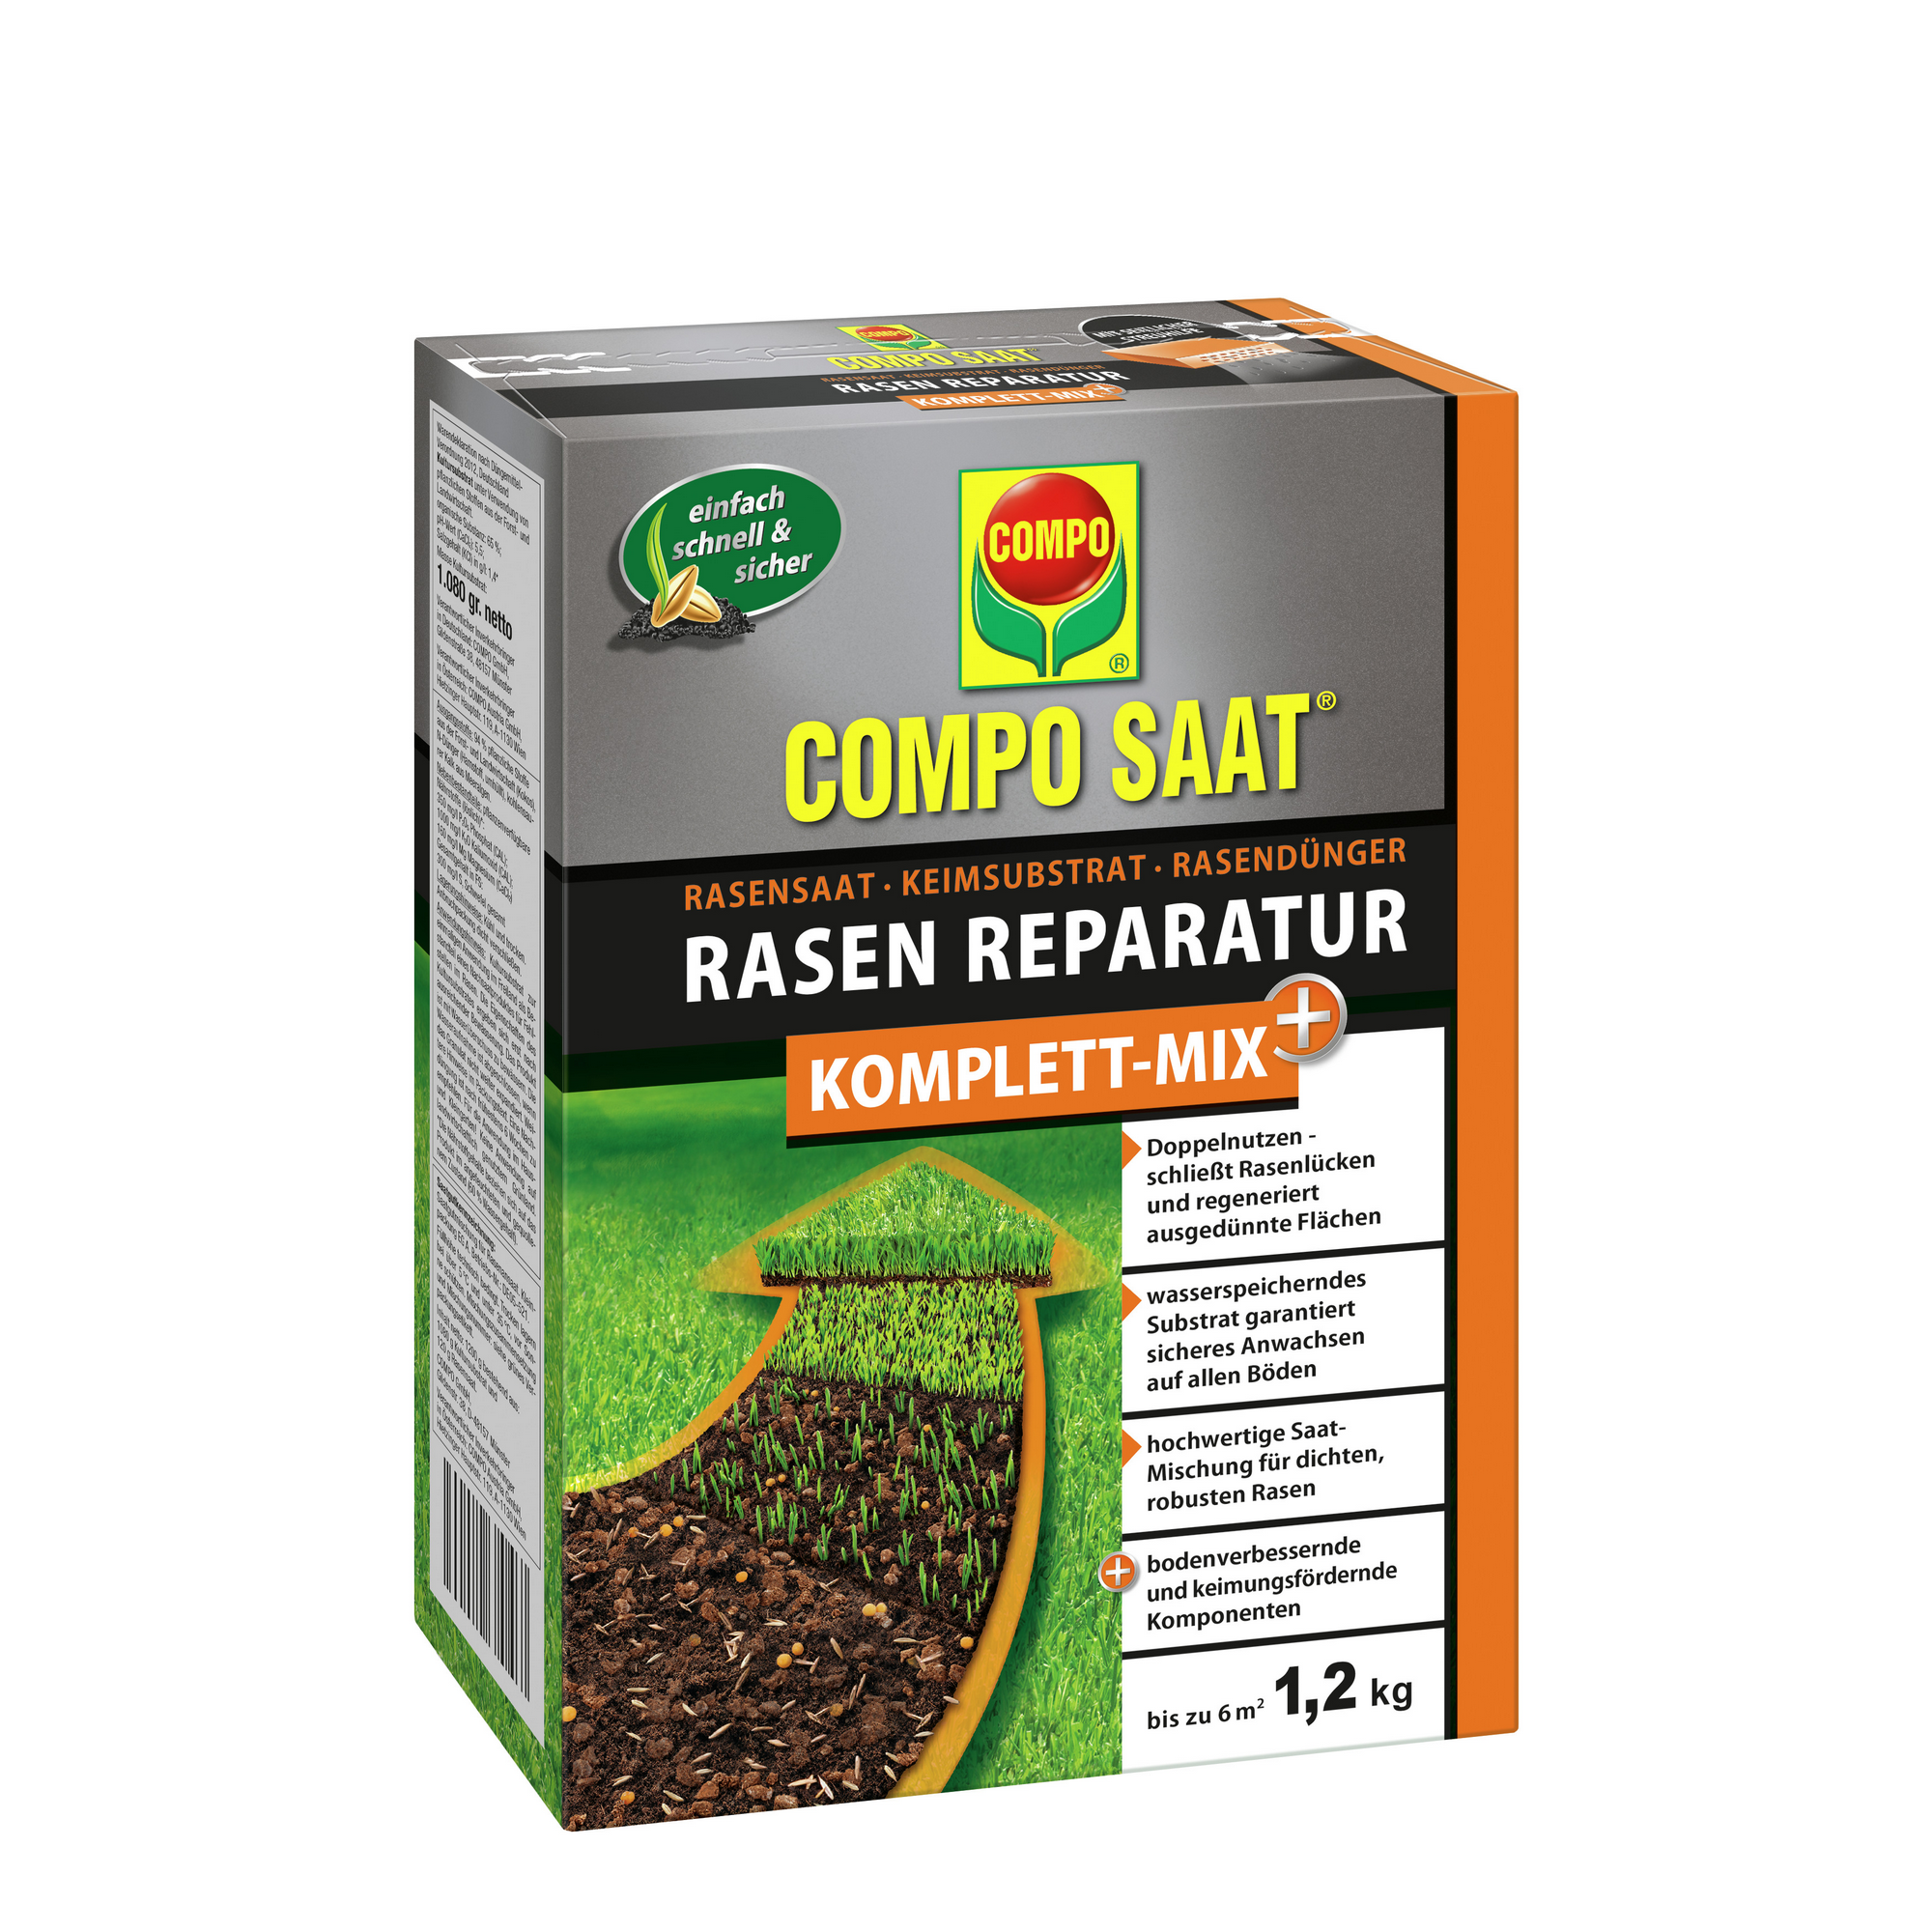 Rasen Reparatur Komplett-Mix+ 1,2 kg + product picture